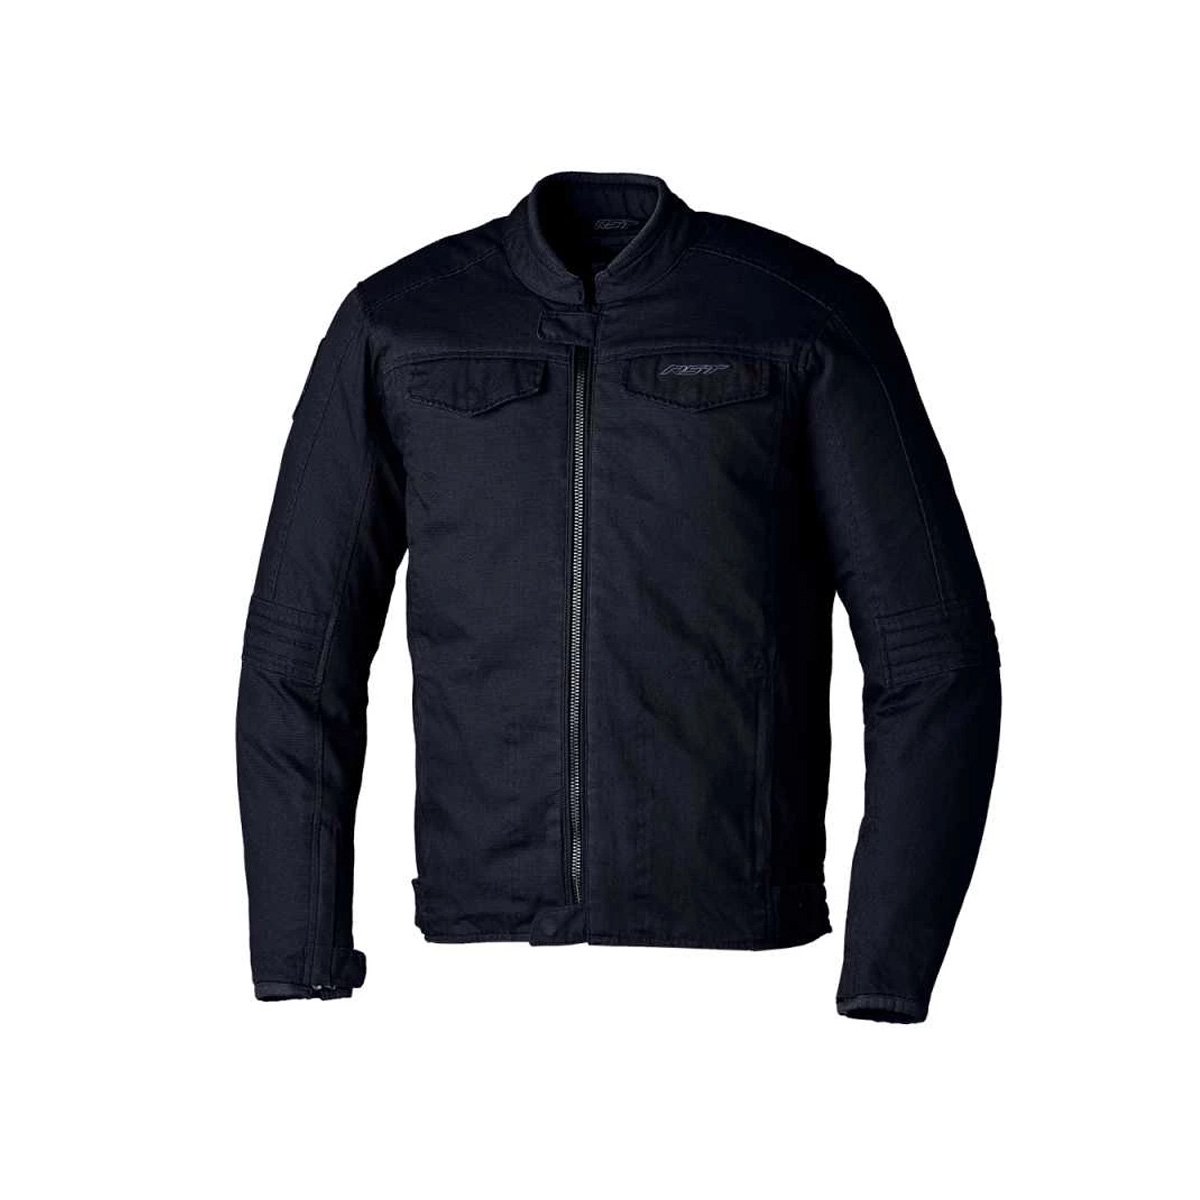 Image of RST IOM TT Crosby 2 CE Textile Jacket Men Black Size 46 ID 5056558112226